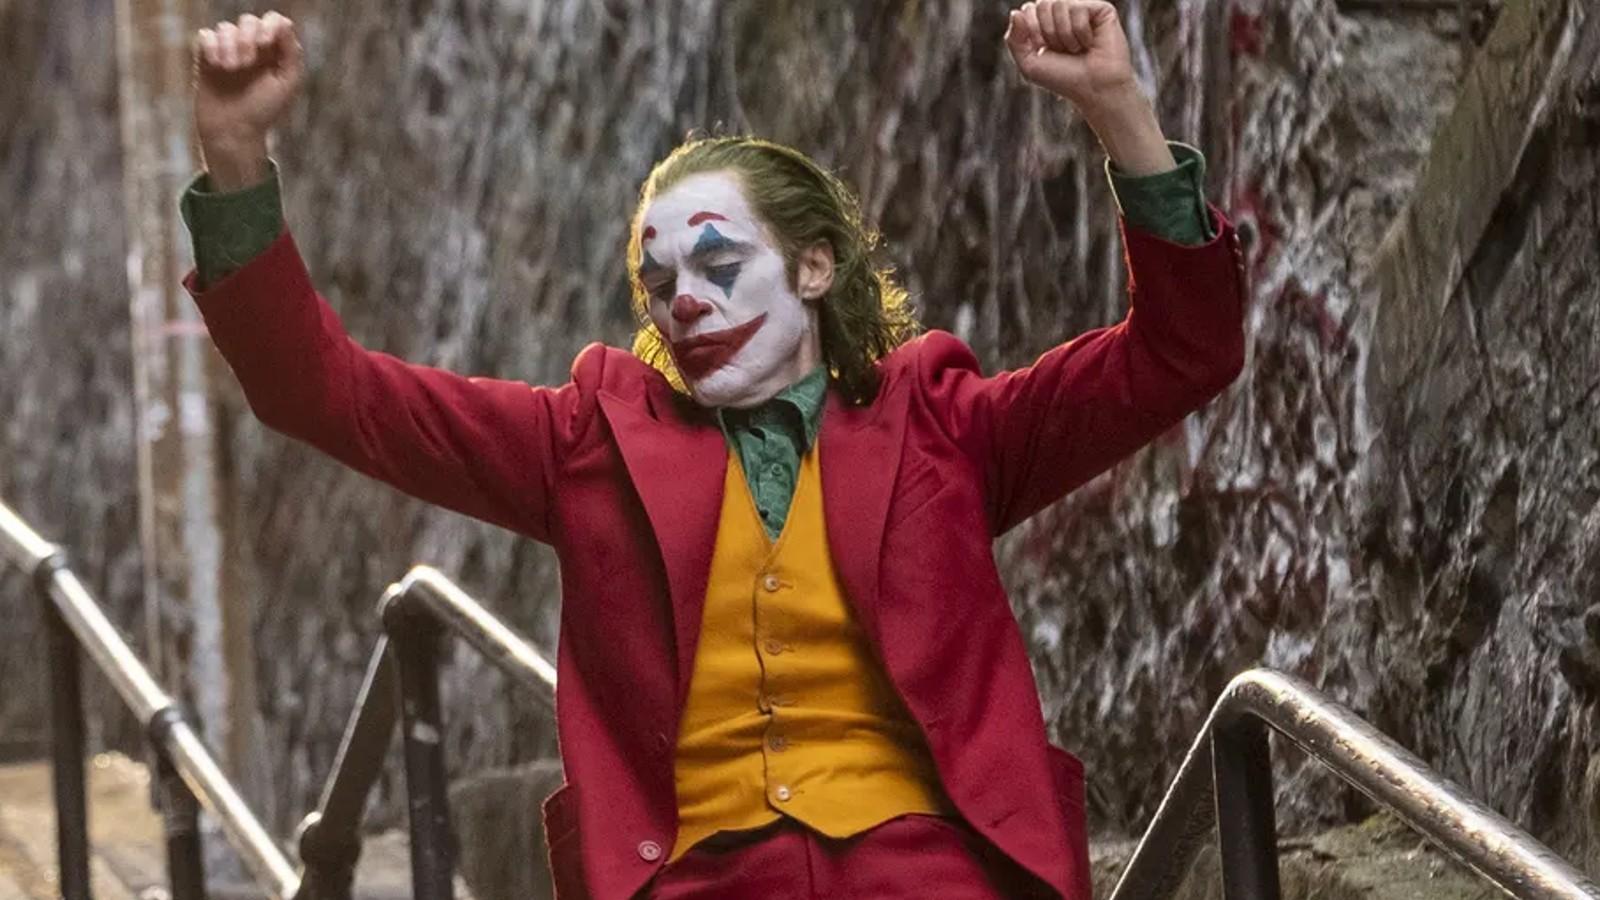 Joaquin Phoenix dancing on the steps in Joker.